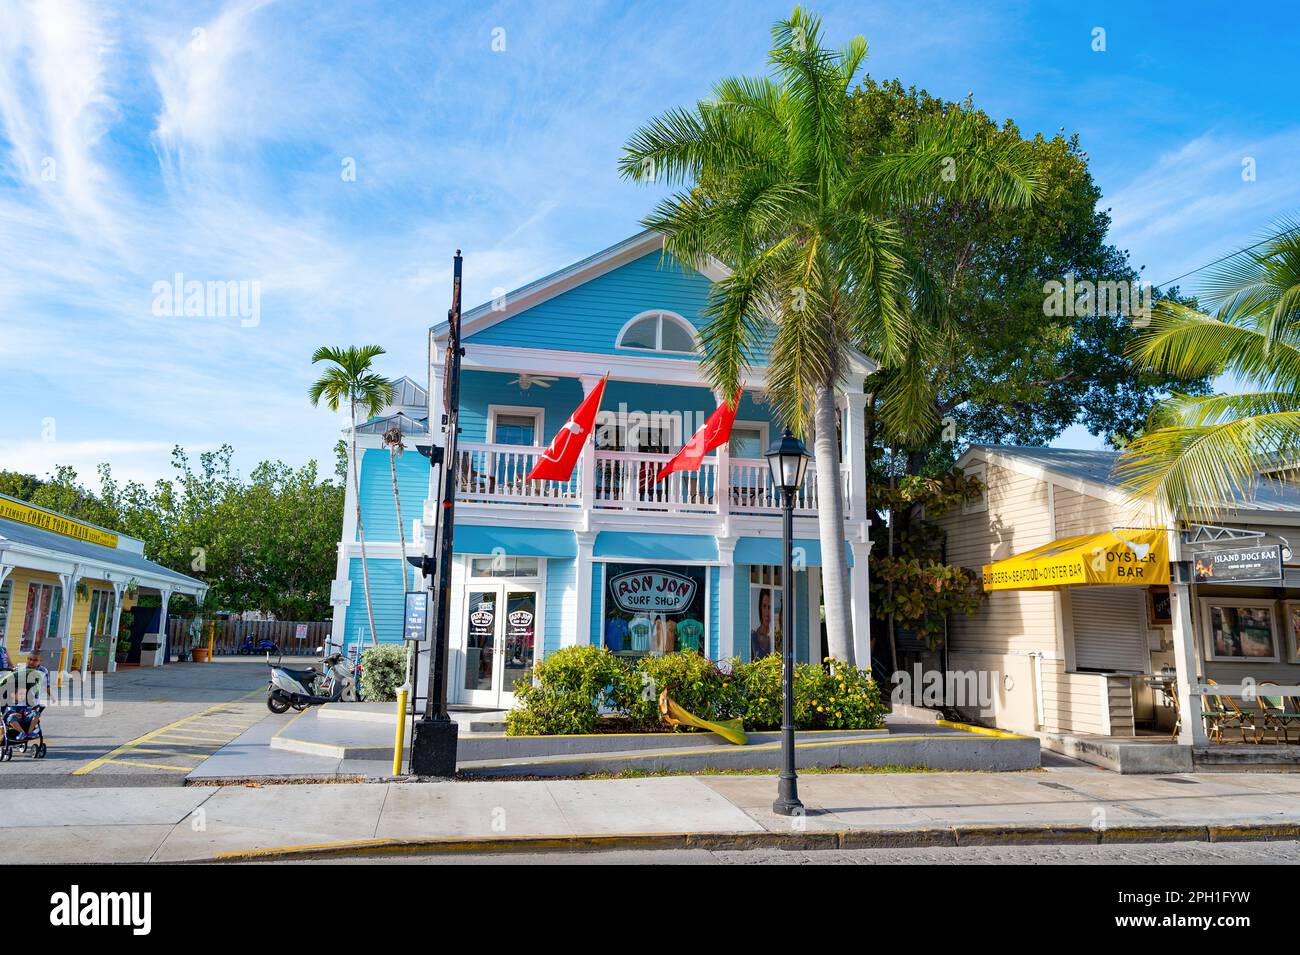 Key West, Florida USA - December 26, 2015: ron jon surf shop storefront. Stock Photo